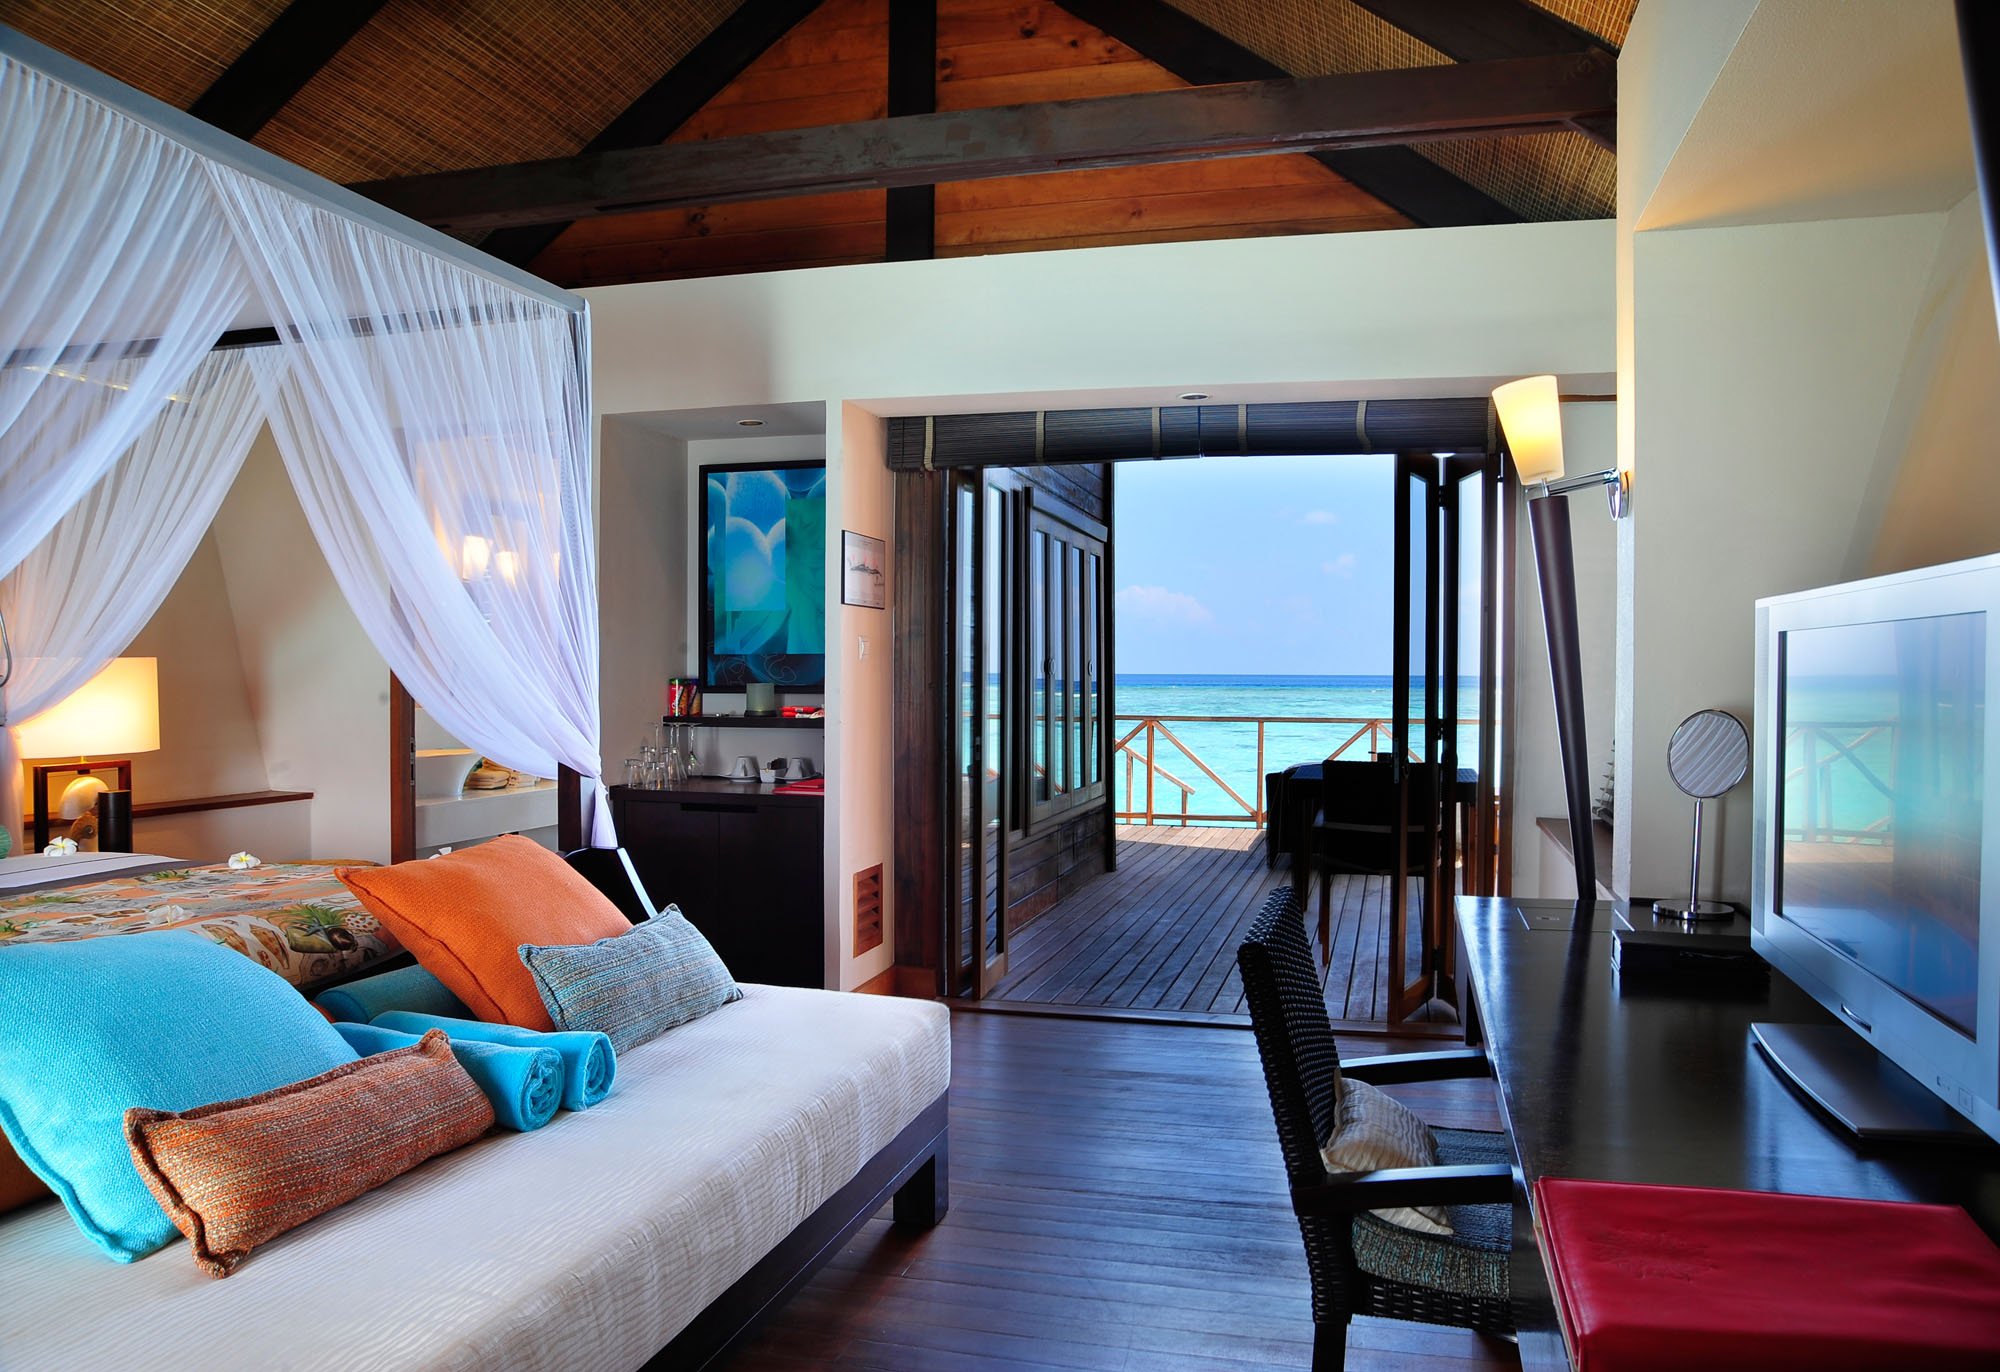 5 Star LUX* Maldives Resort | Architecture & Design